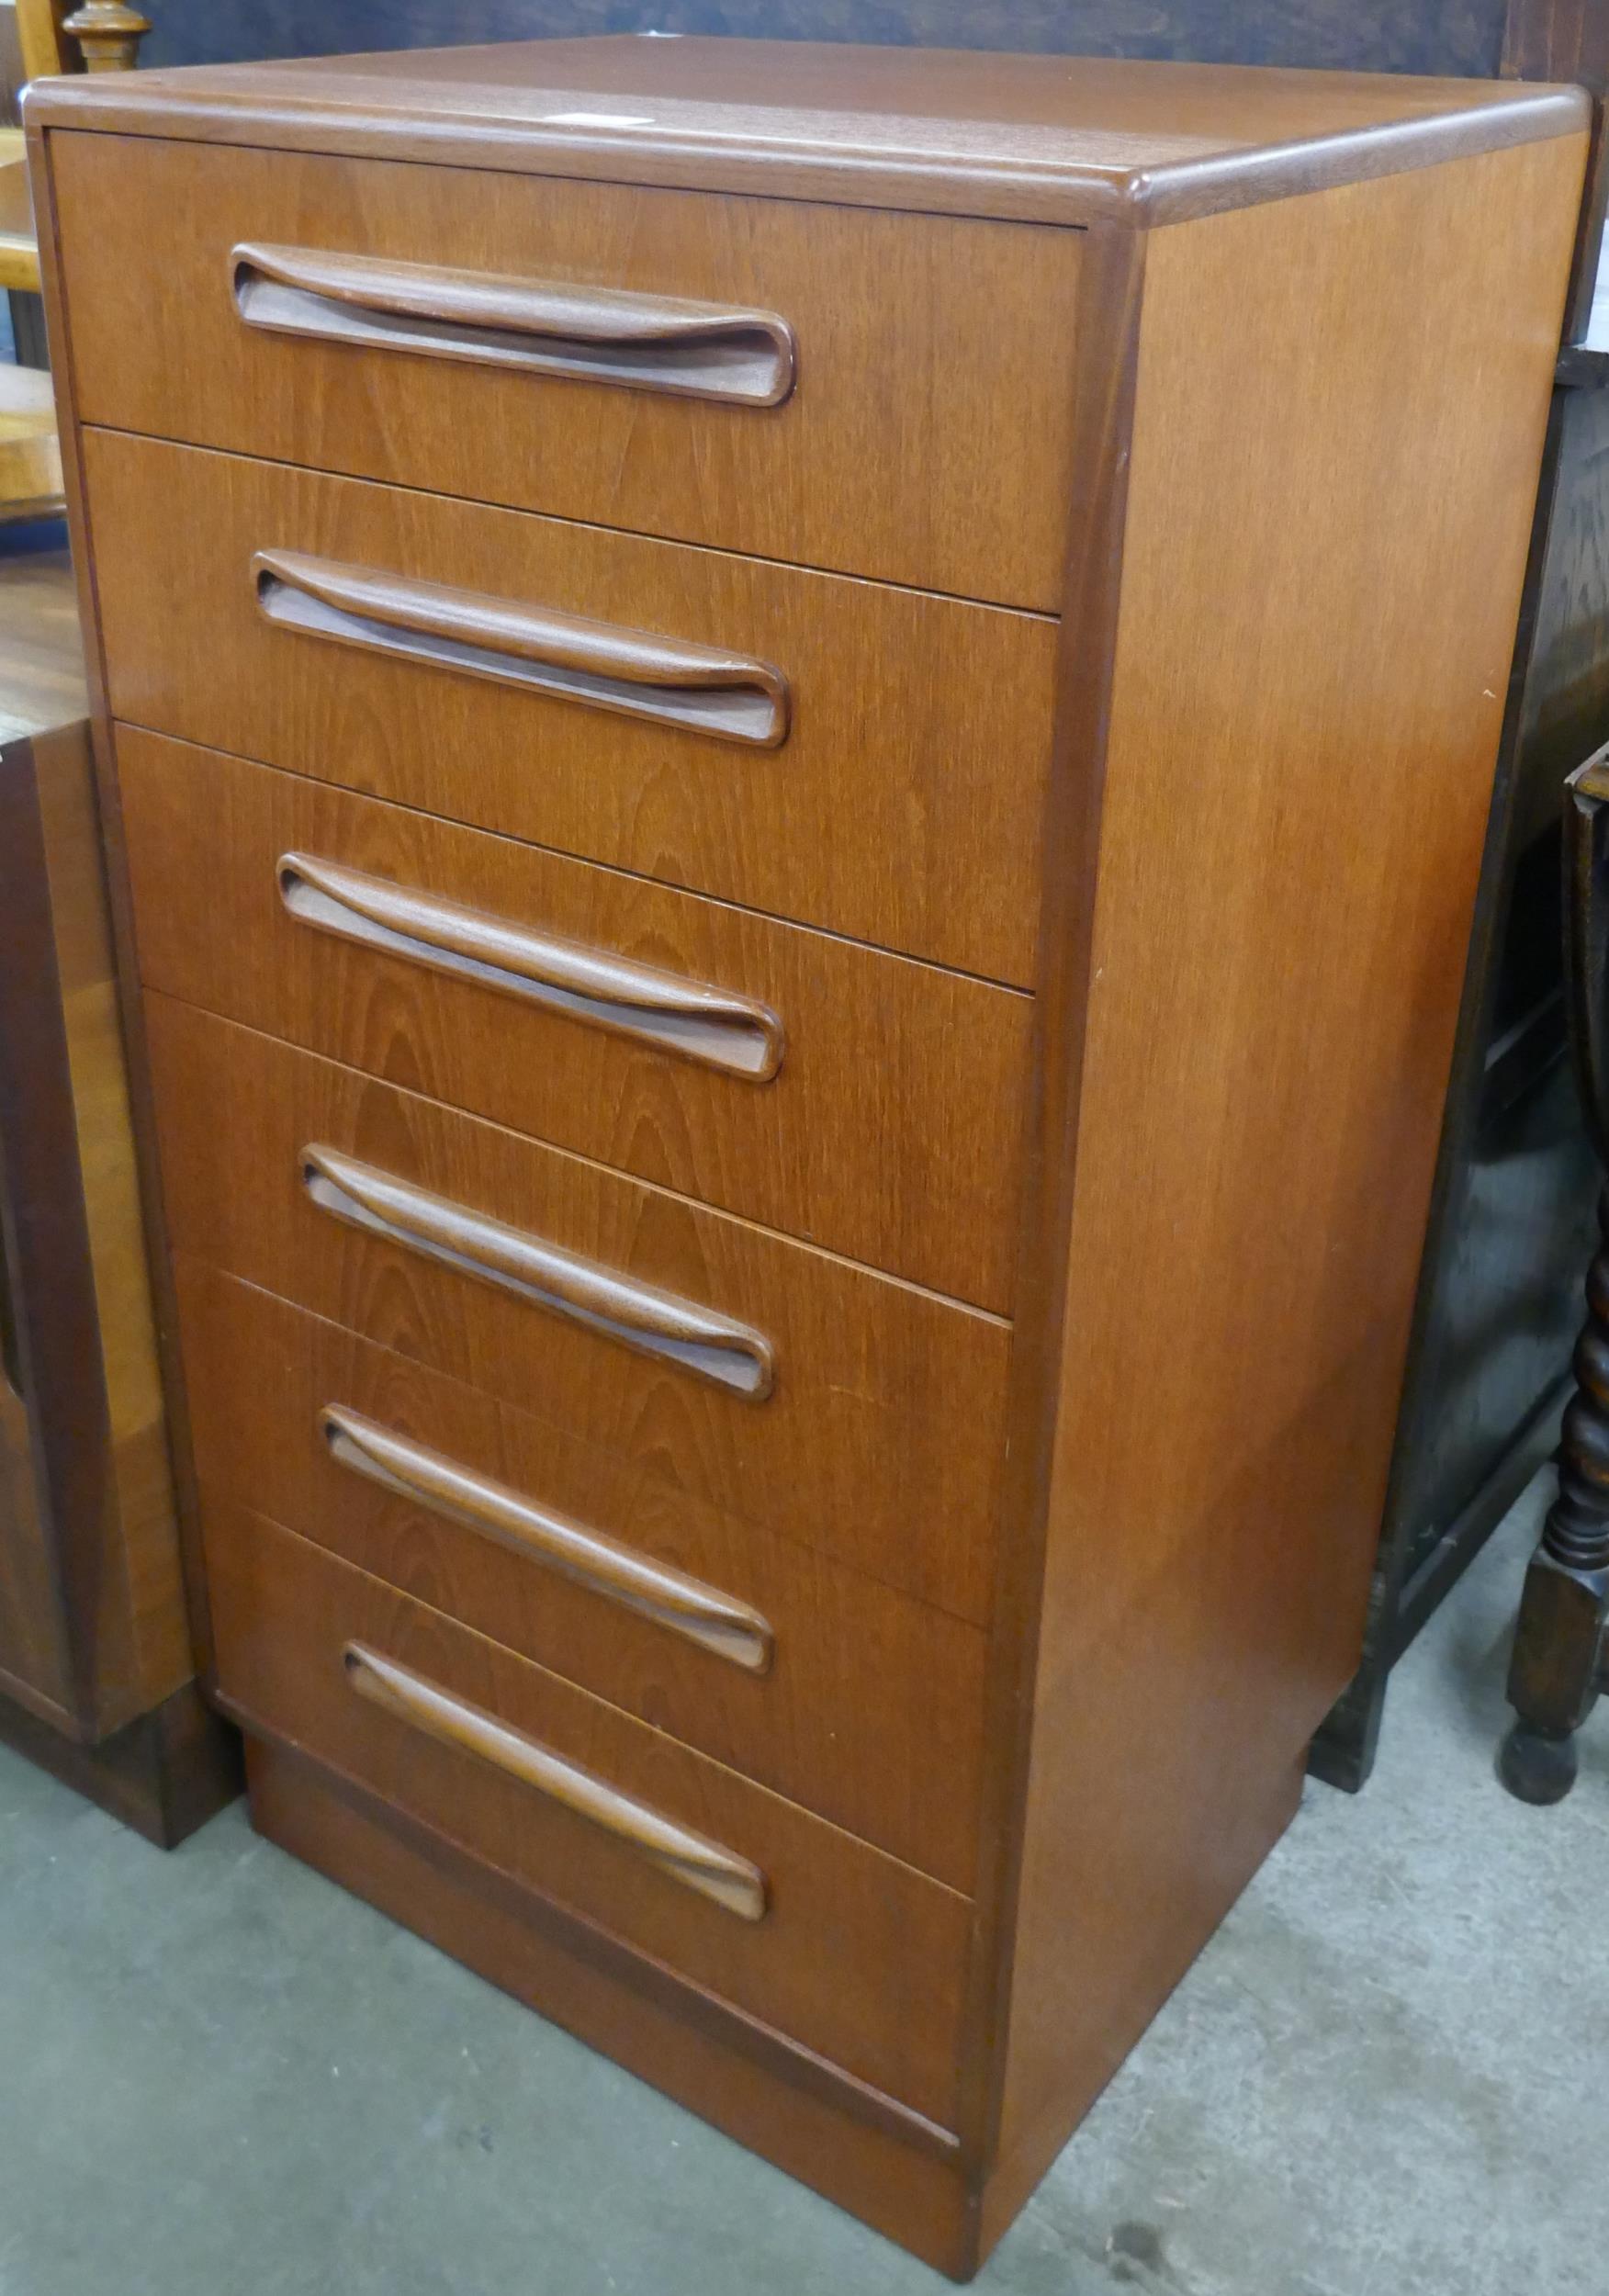 A G-Plan Fresco teak chest of drawers